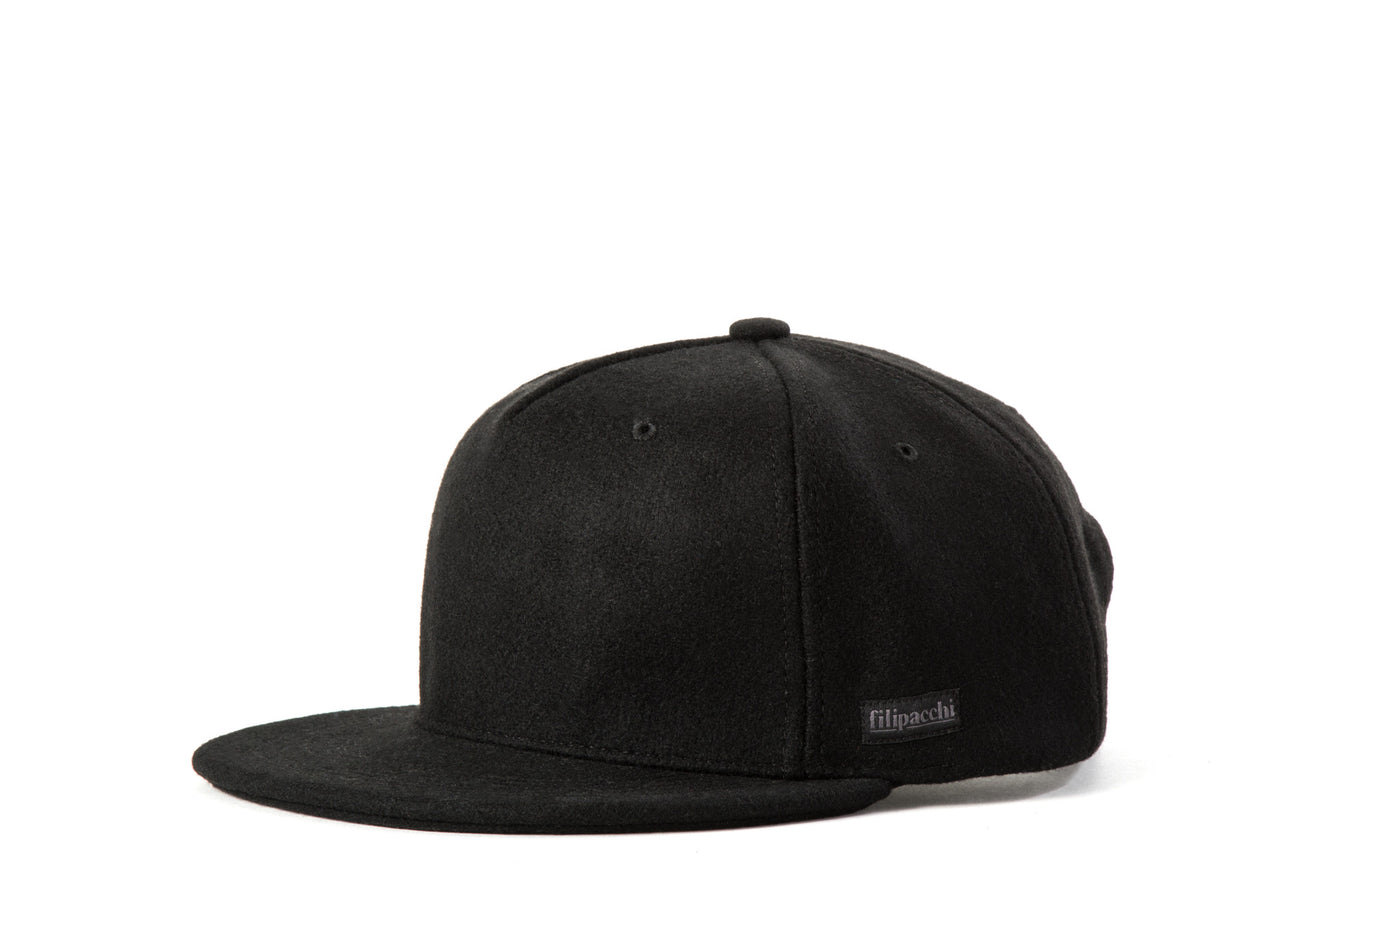 Filipacchi Black Wool Trucker Hat